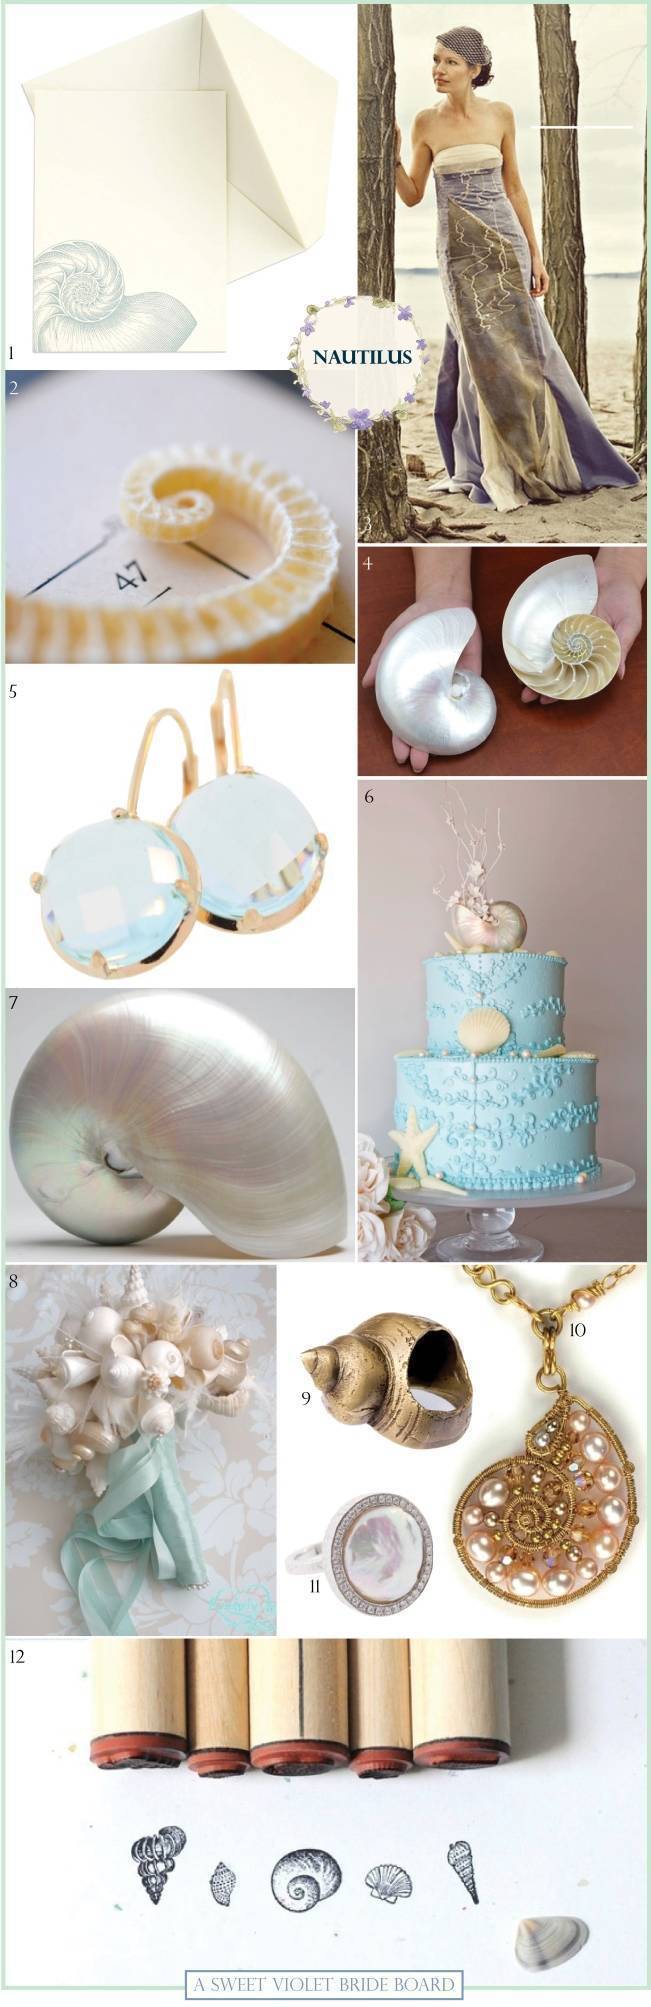 Wedding Inspiration Board #5: Nautilus